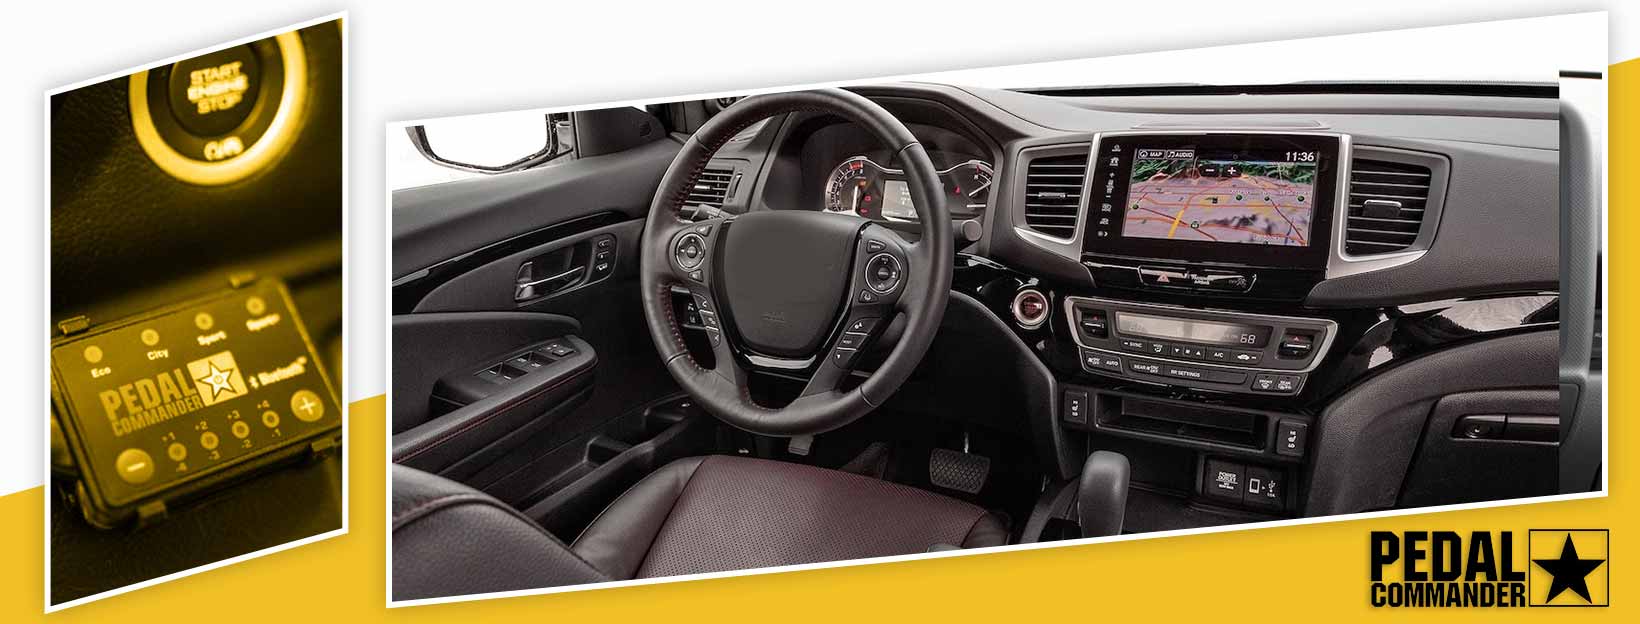 Pedal Commander for Honda Ridgeline - interior